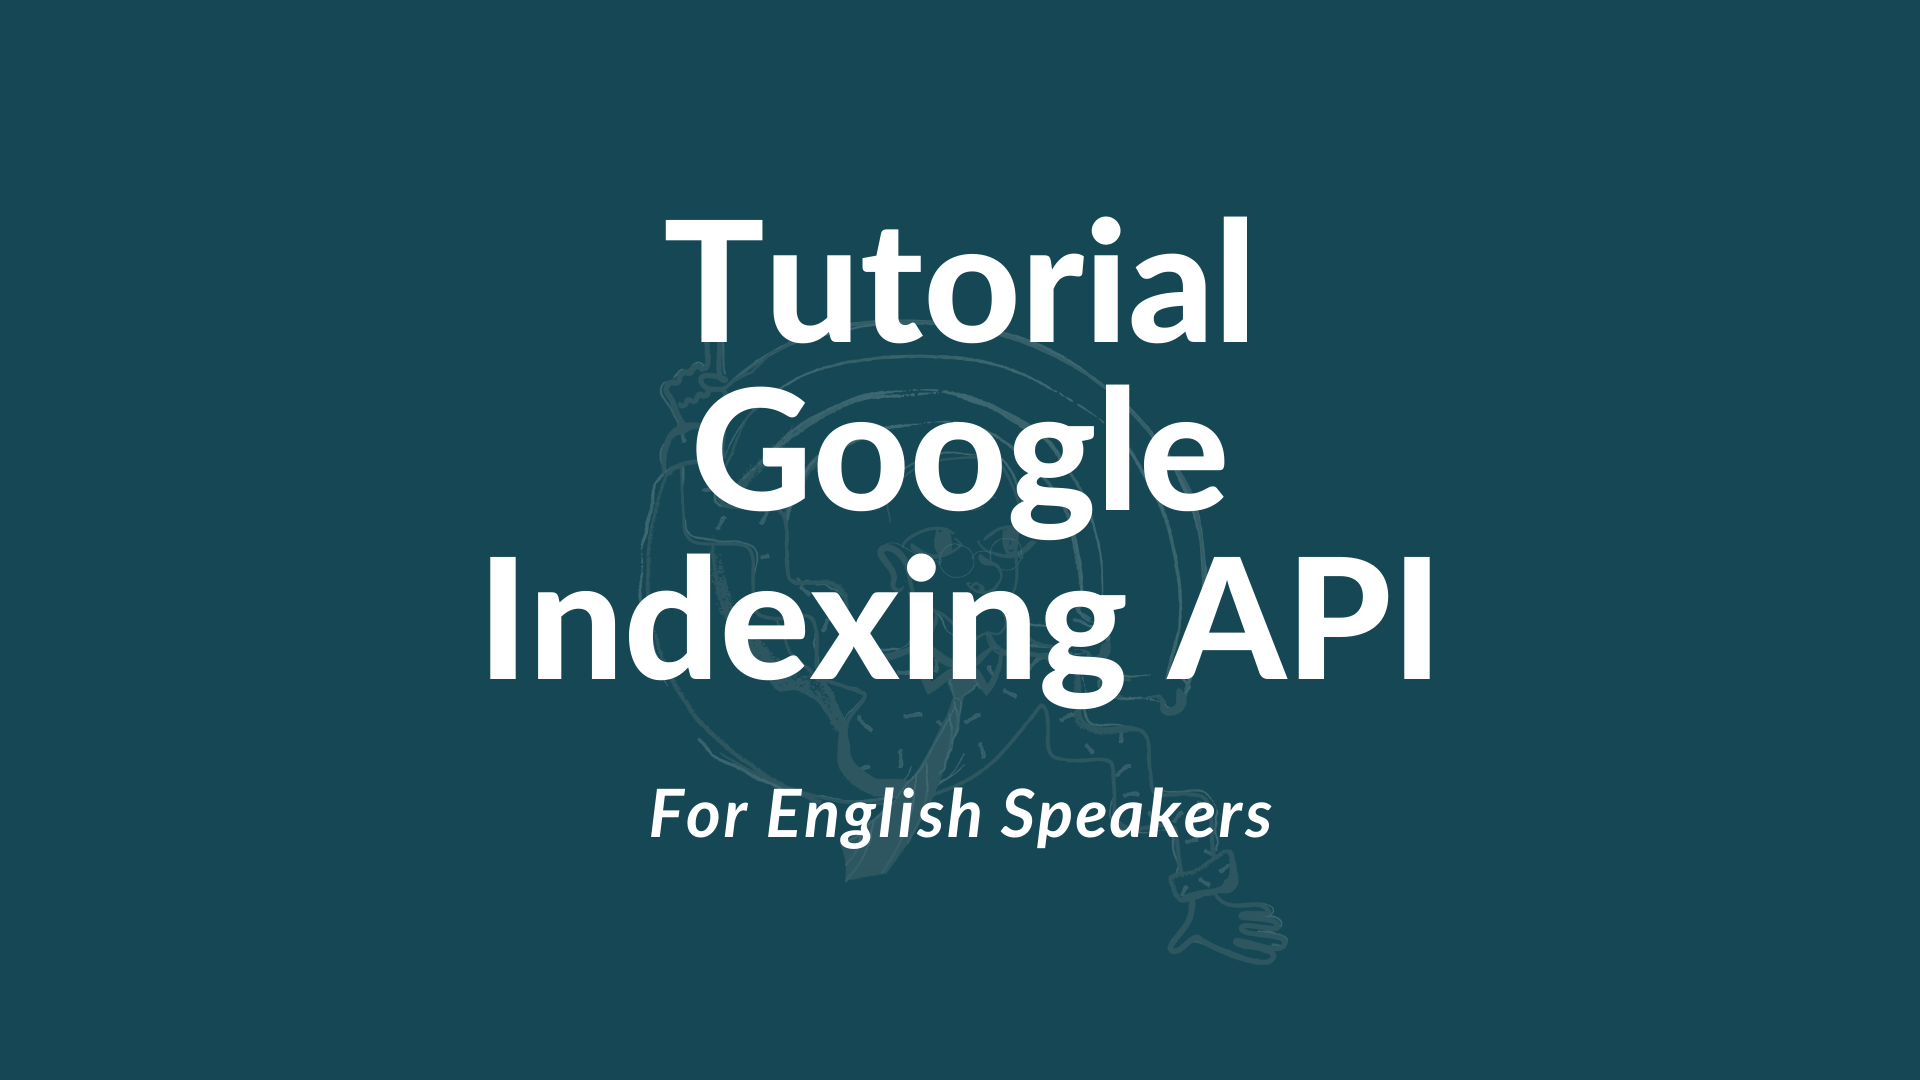 Google Indexing API Tutorial in English